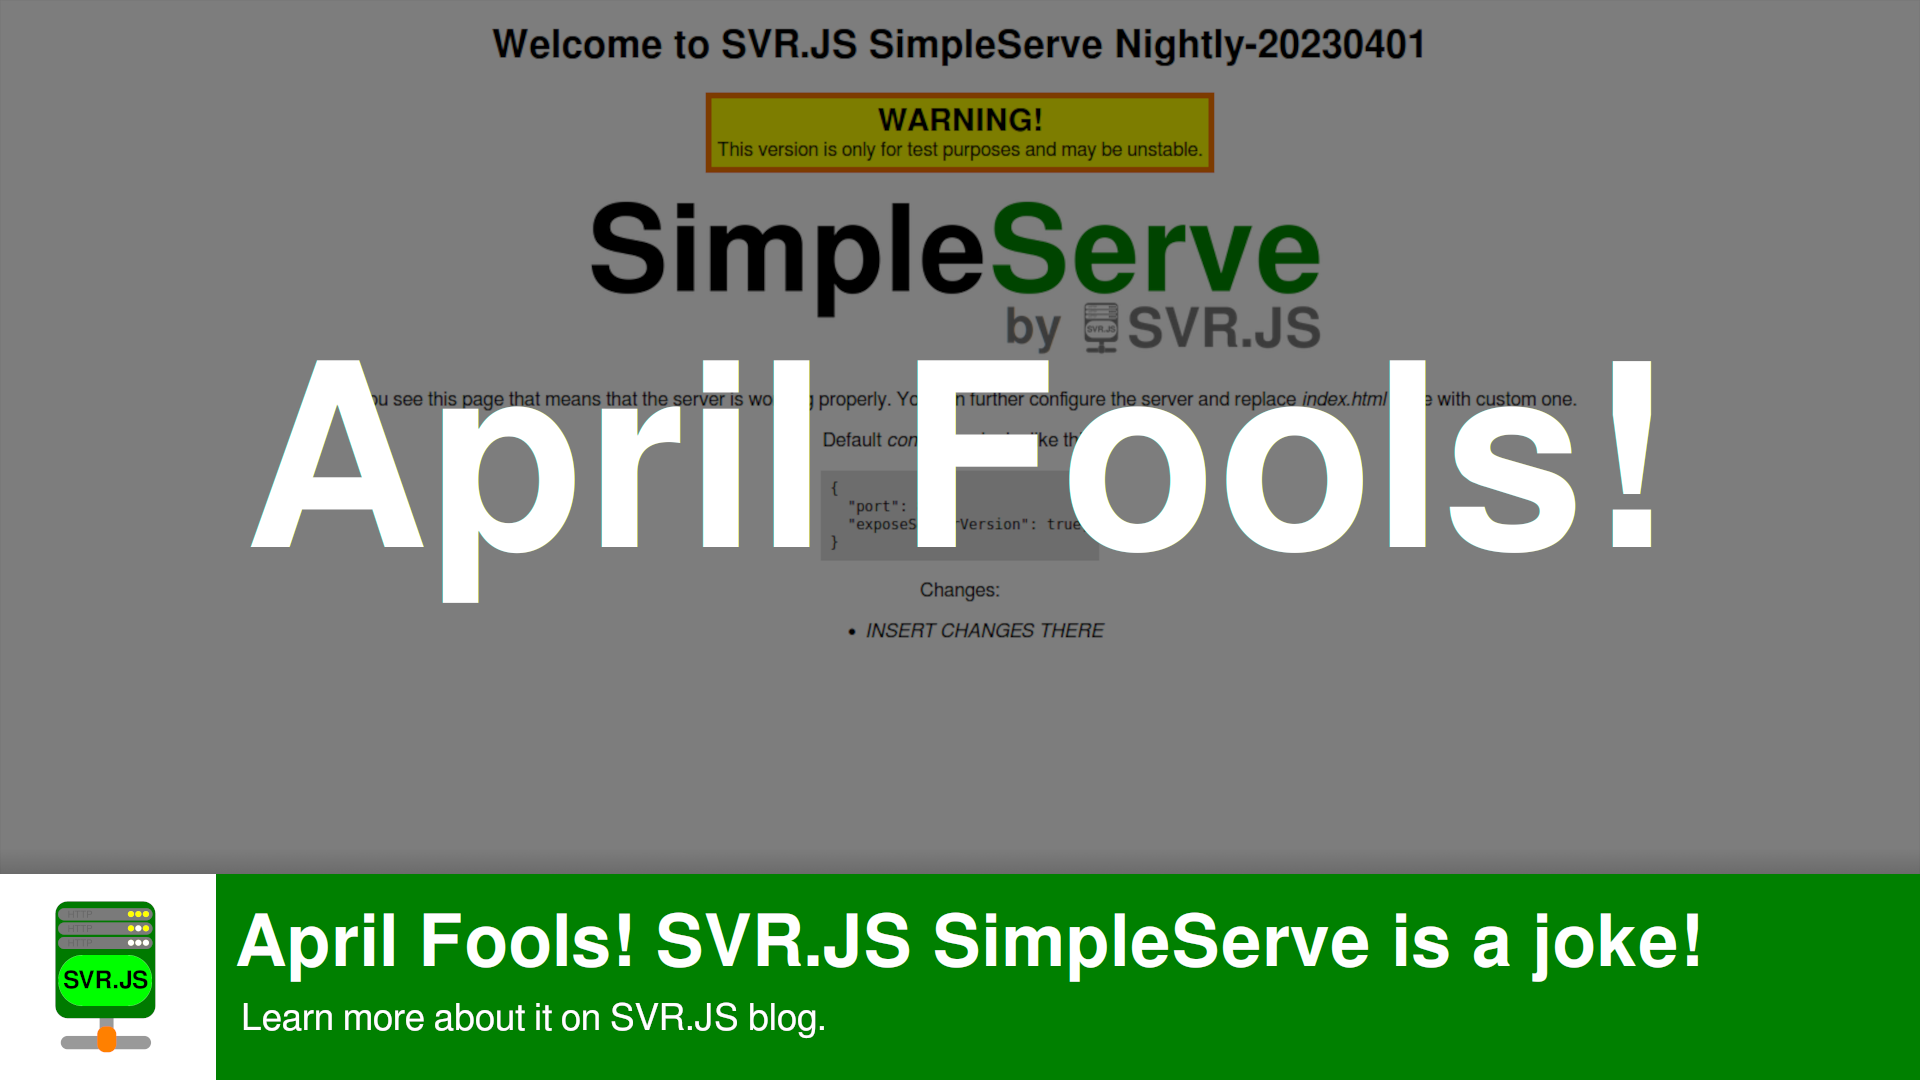 April Fools! SVR.JS SimpleServe is a joke!